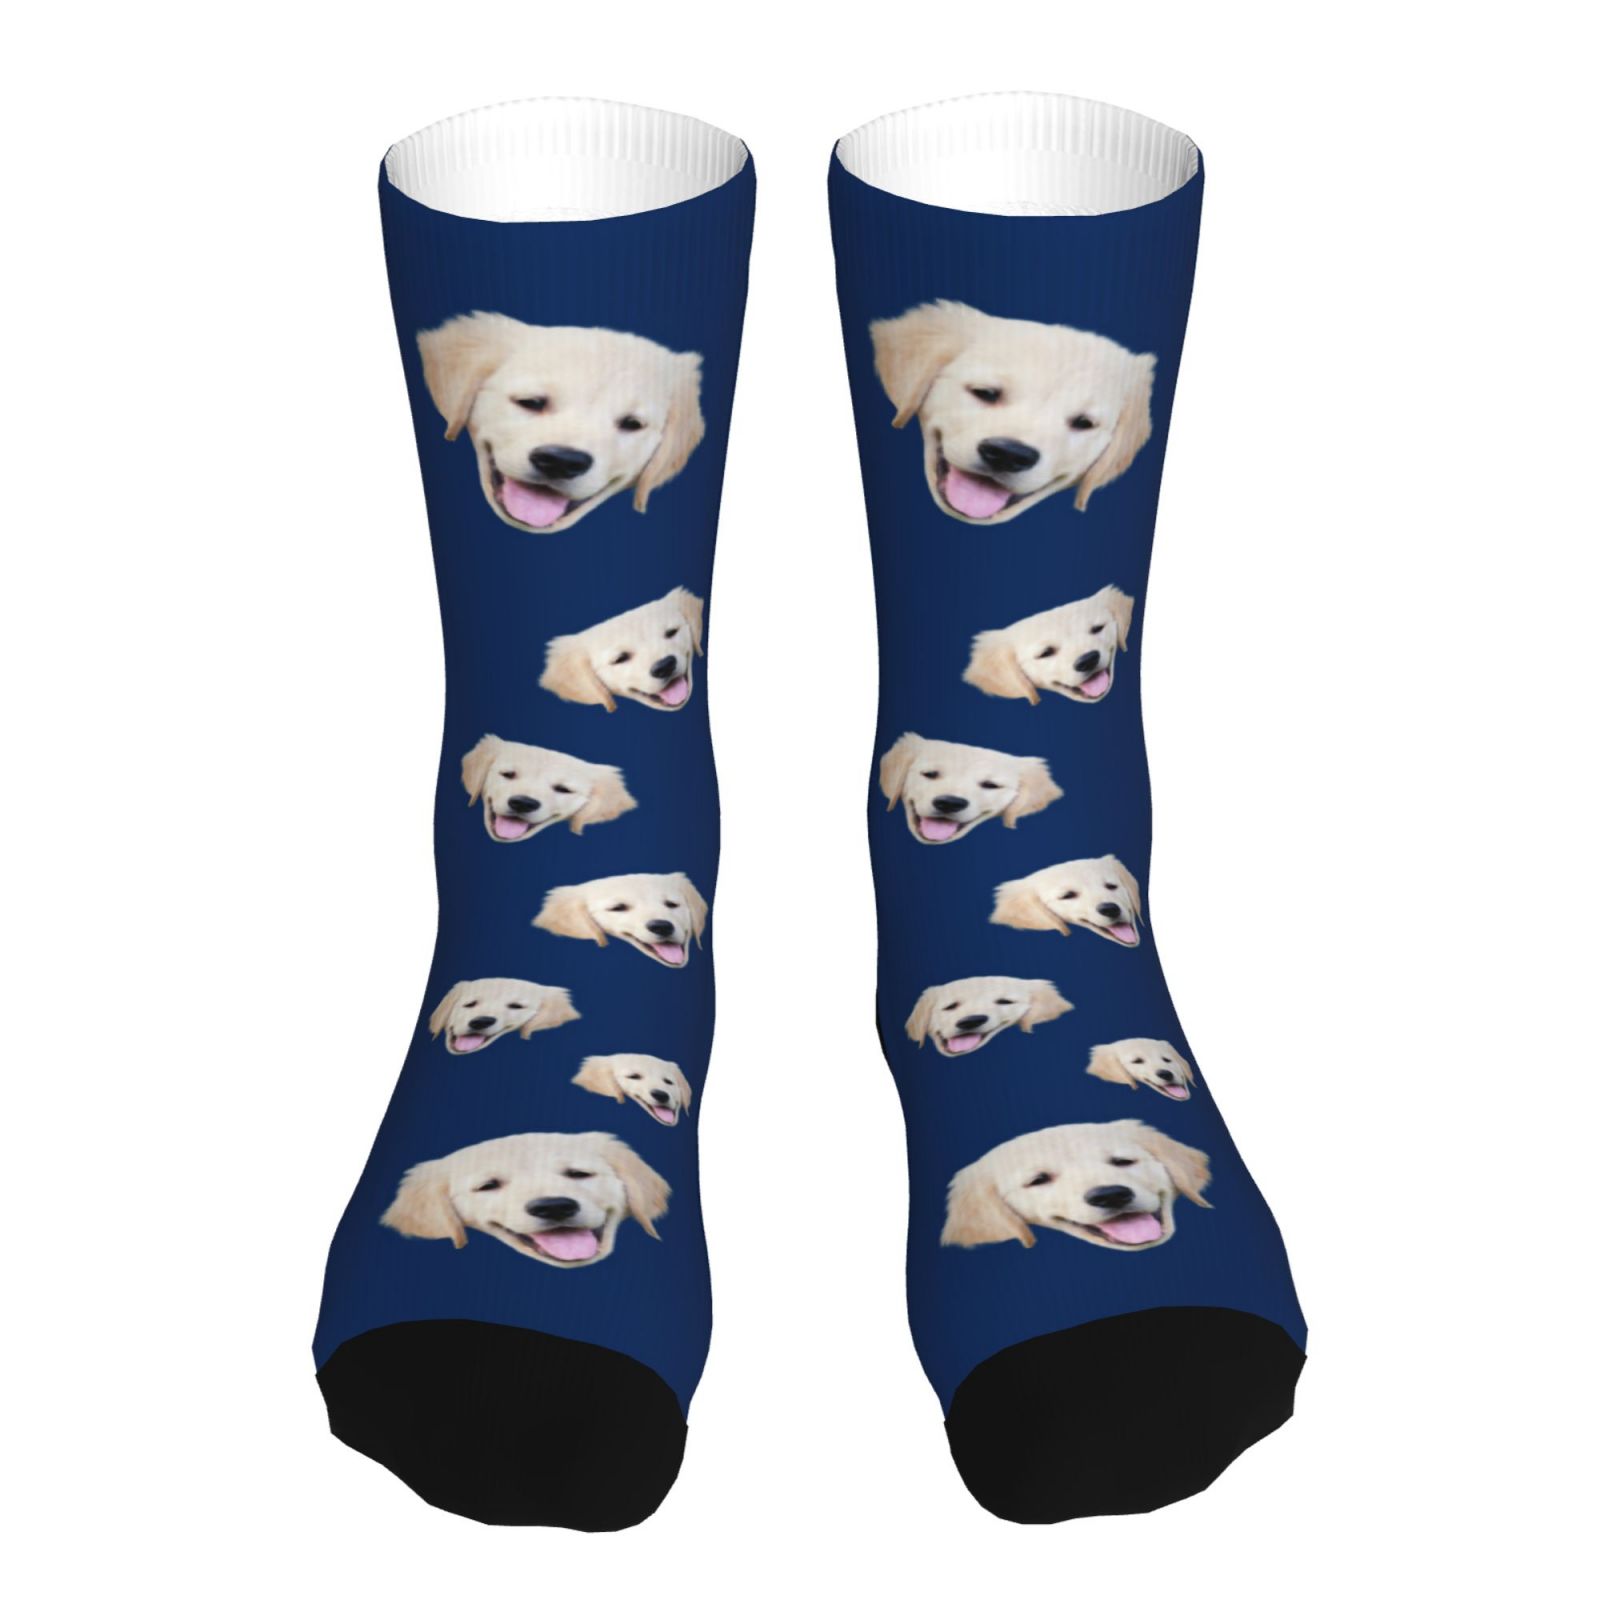 Personalized Printed Photo Socks for Custom Socks